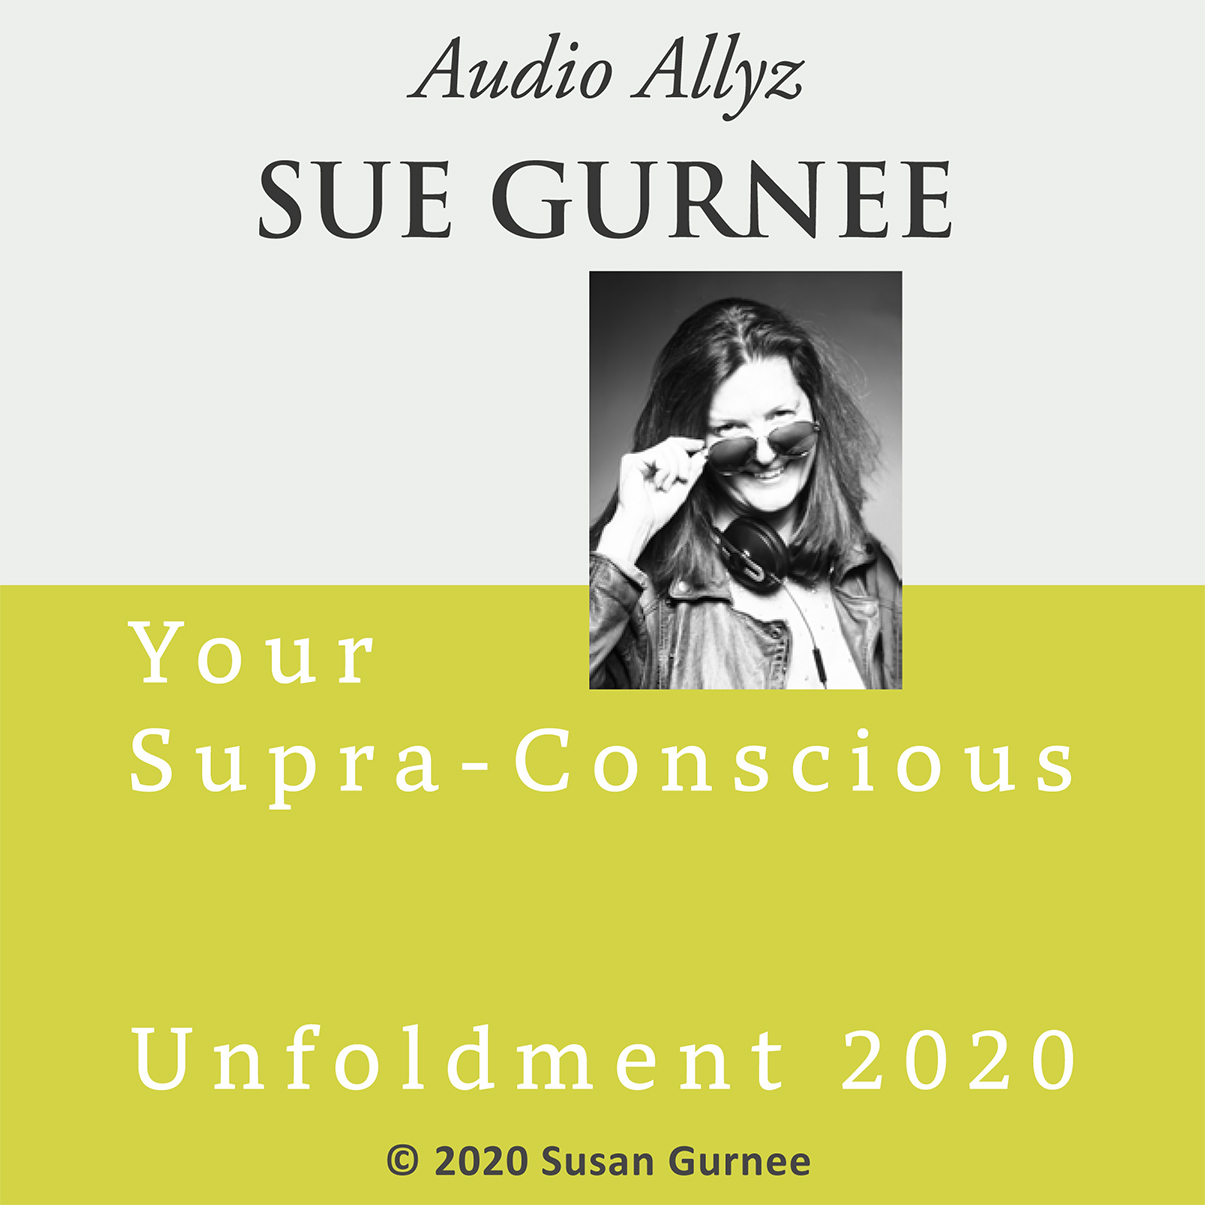 Audio Allyz Sue Gurnee - Unfoldment 2020 - Your Supraconscious